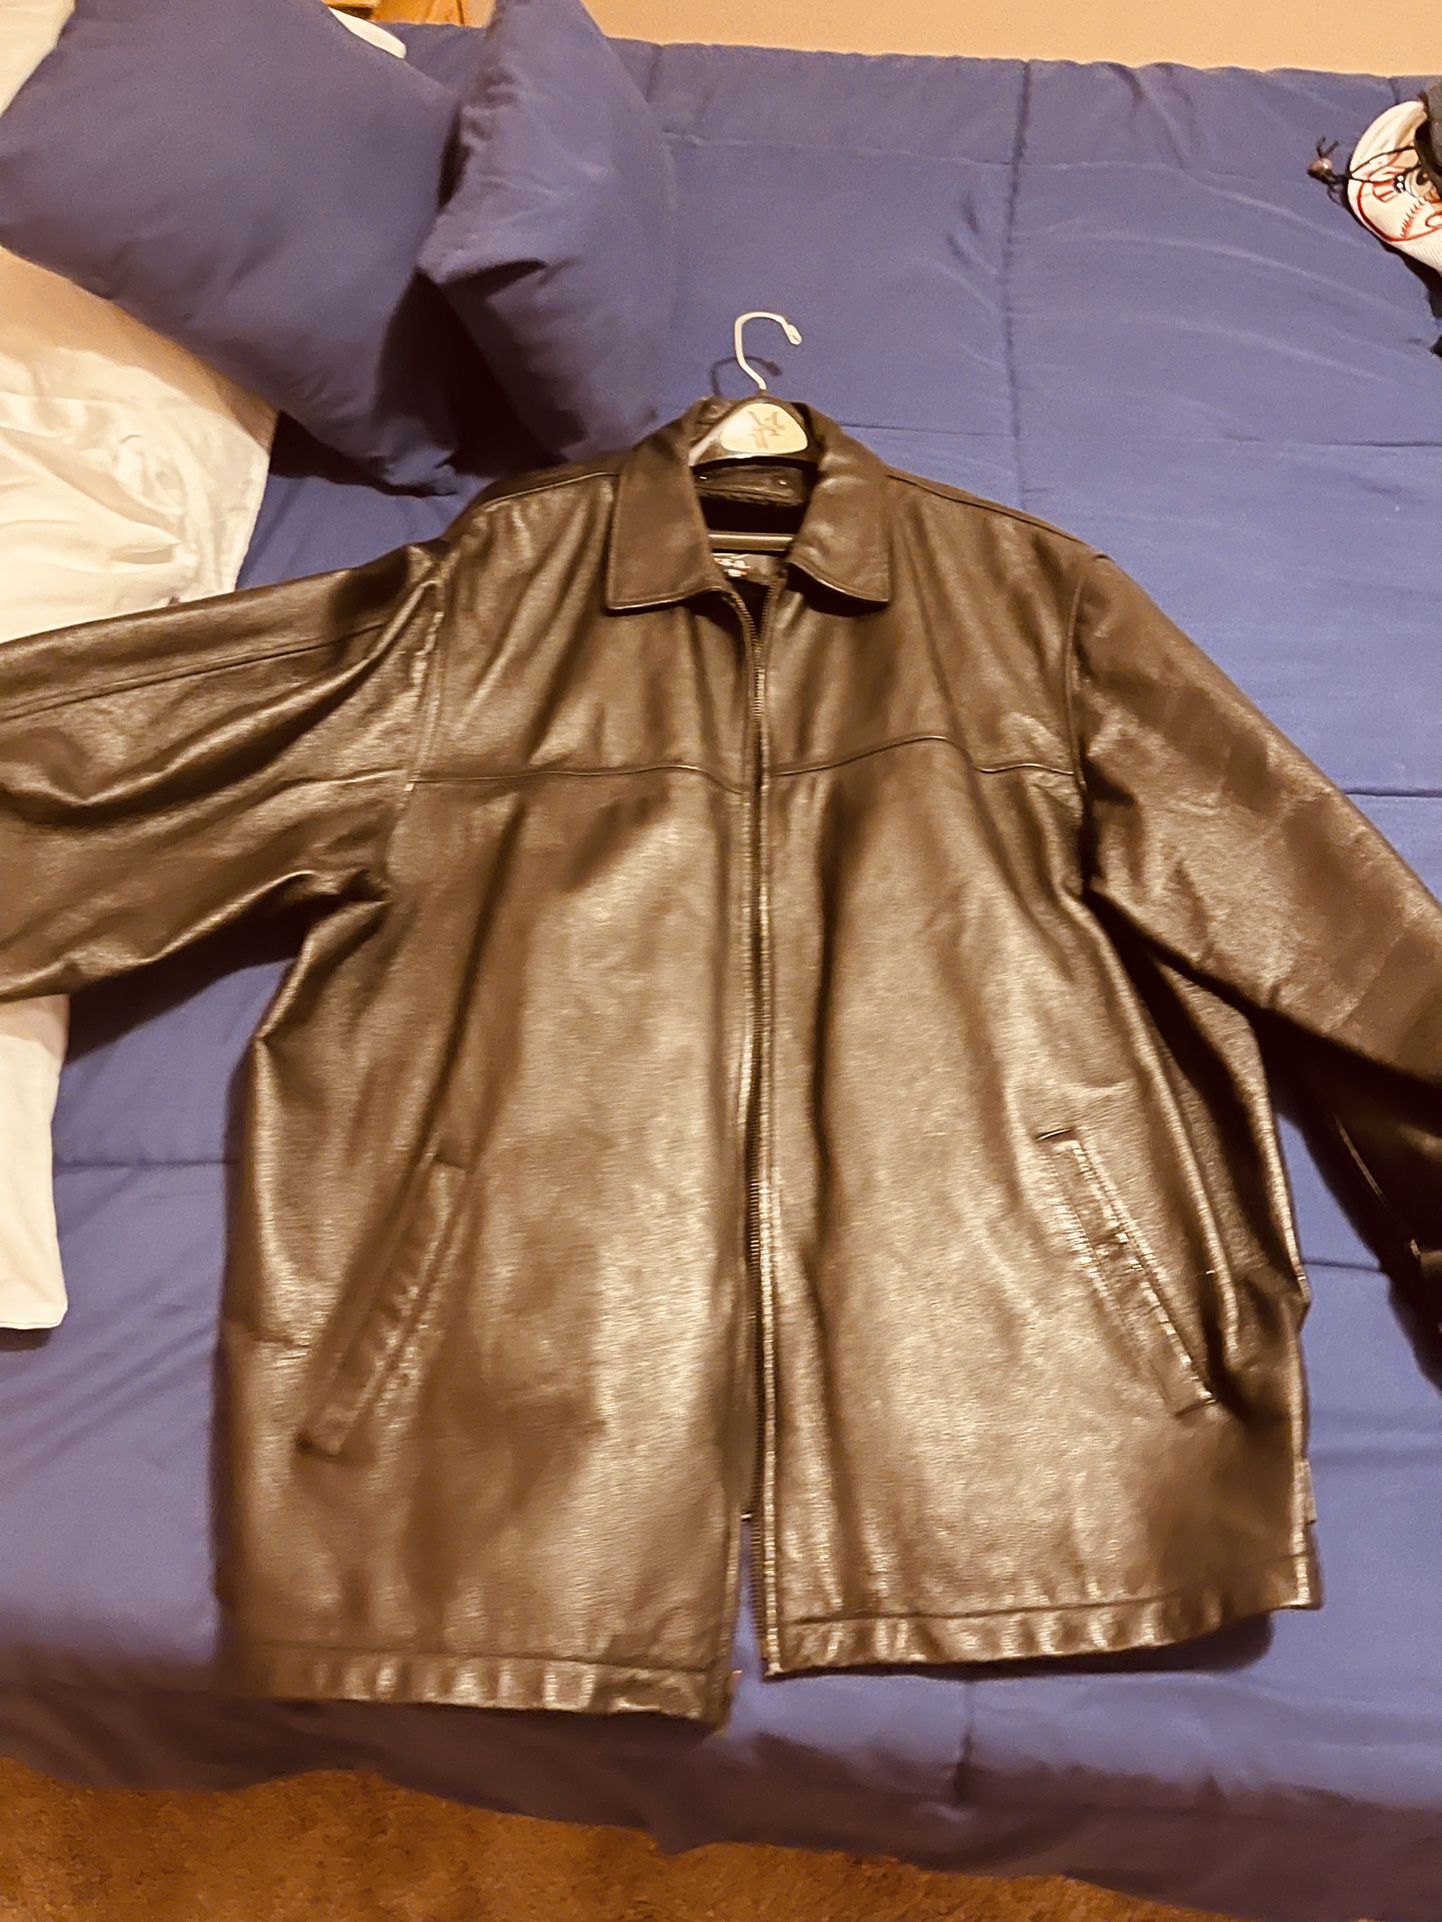 Black Leather Jacket In Size 4X